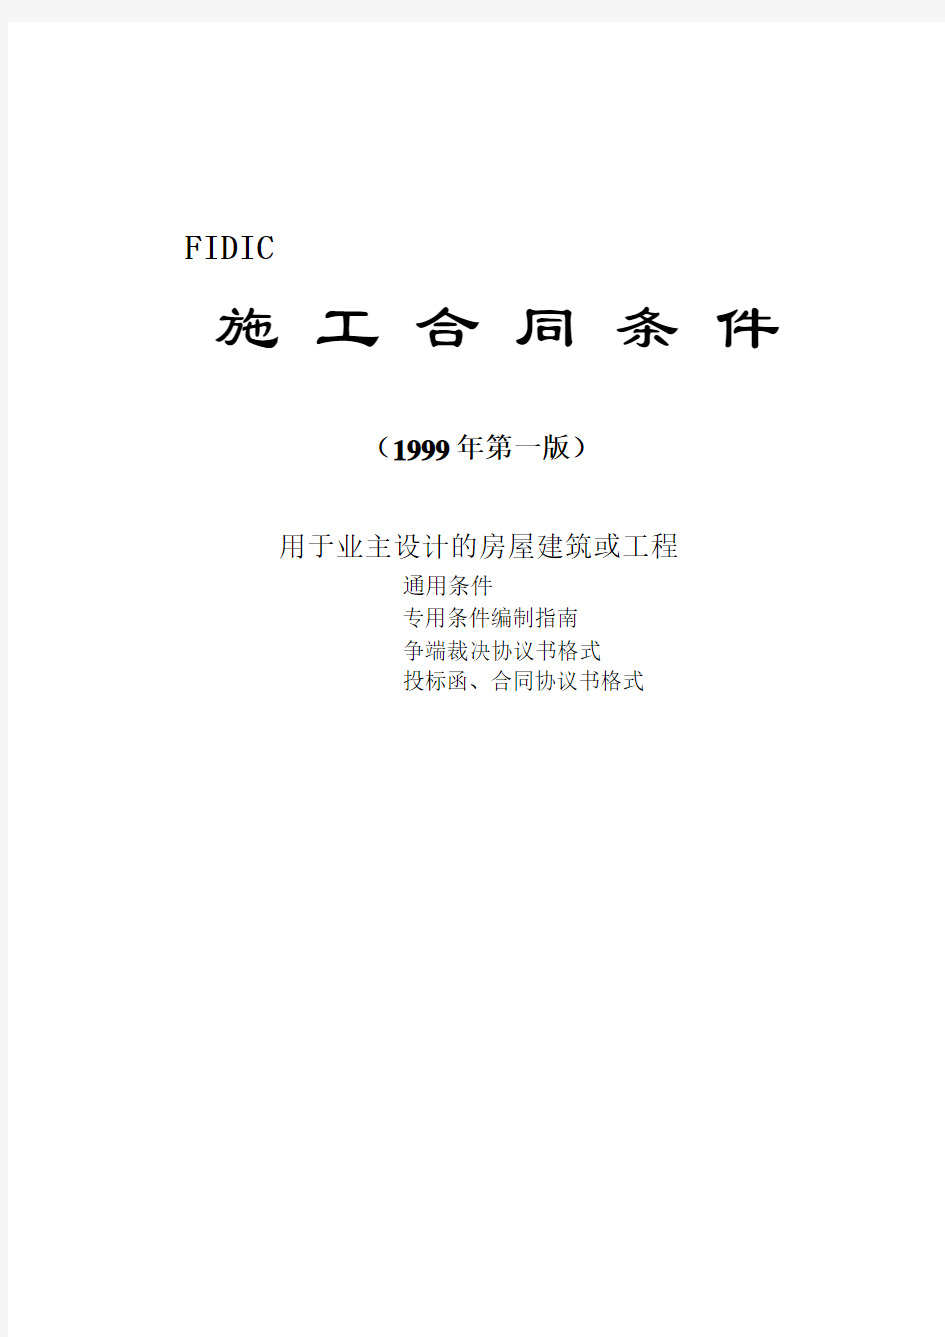 FIDIC99新红皮书全文